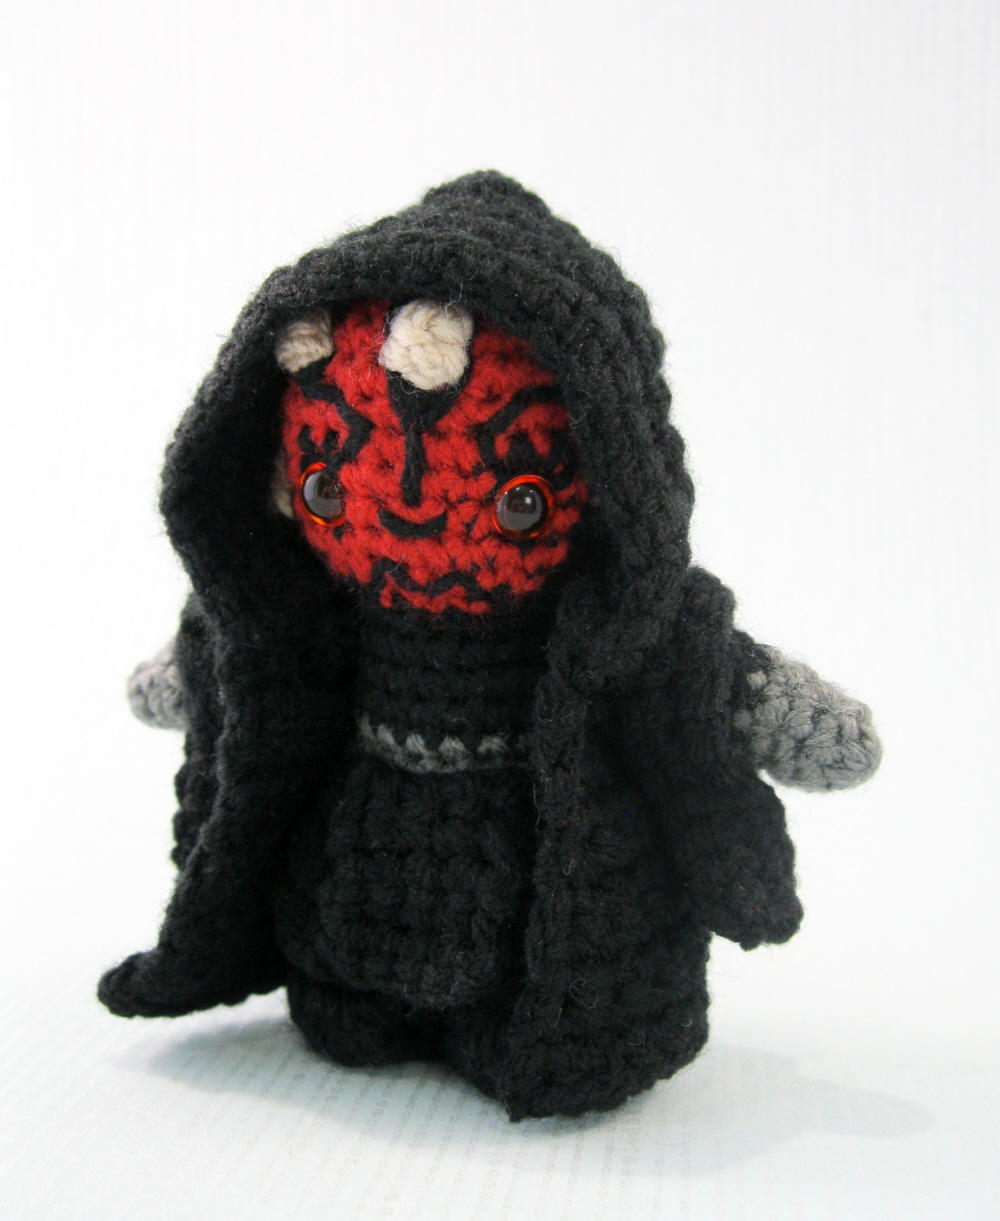 LucyRavenscar - Crochet Creatures: Harry Potter Crochet - yarn used